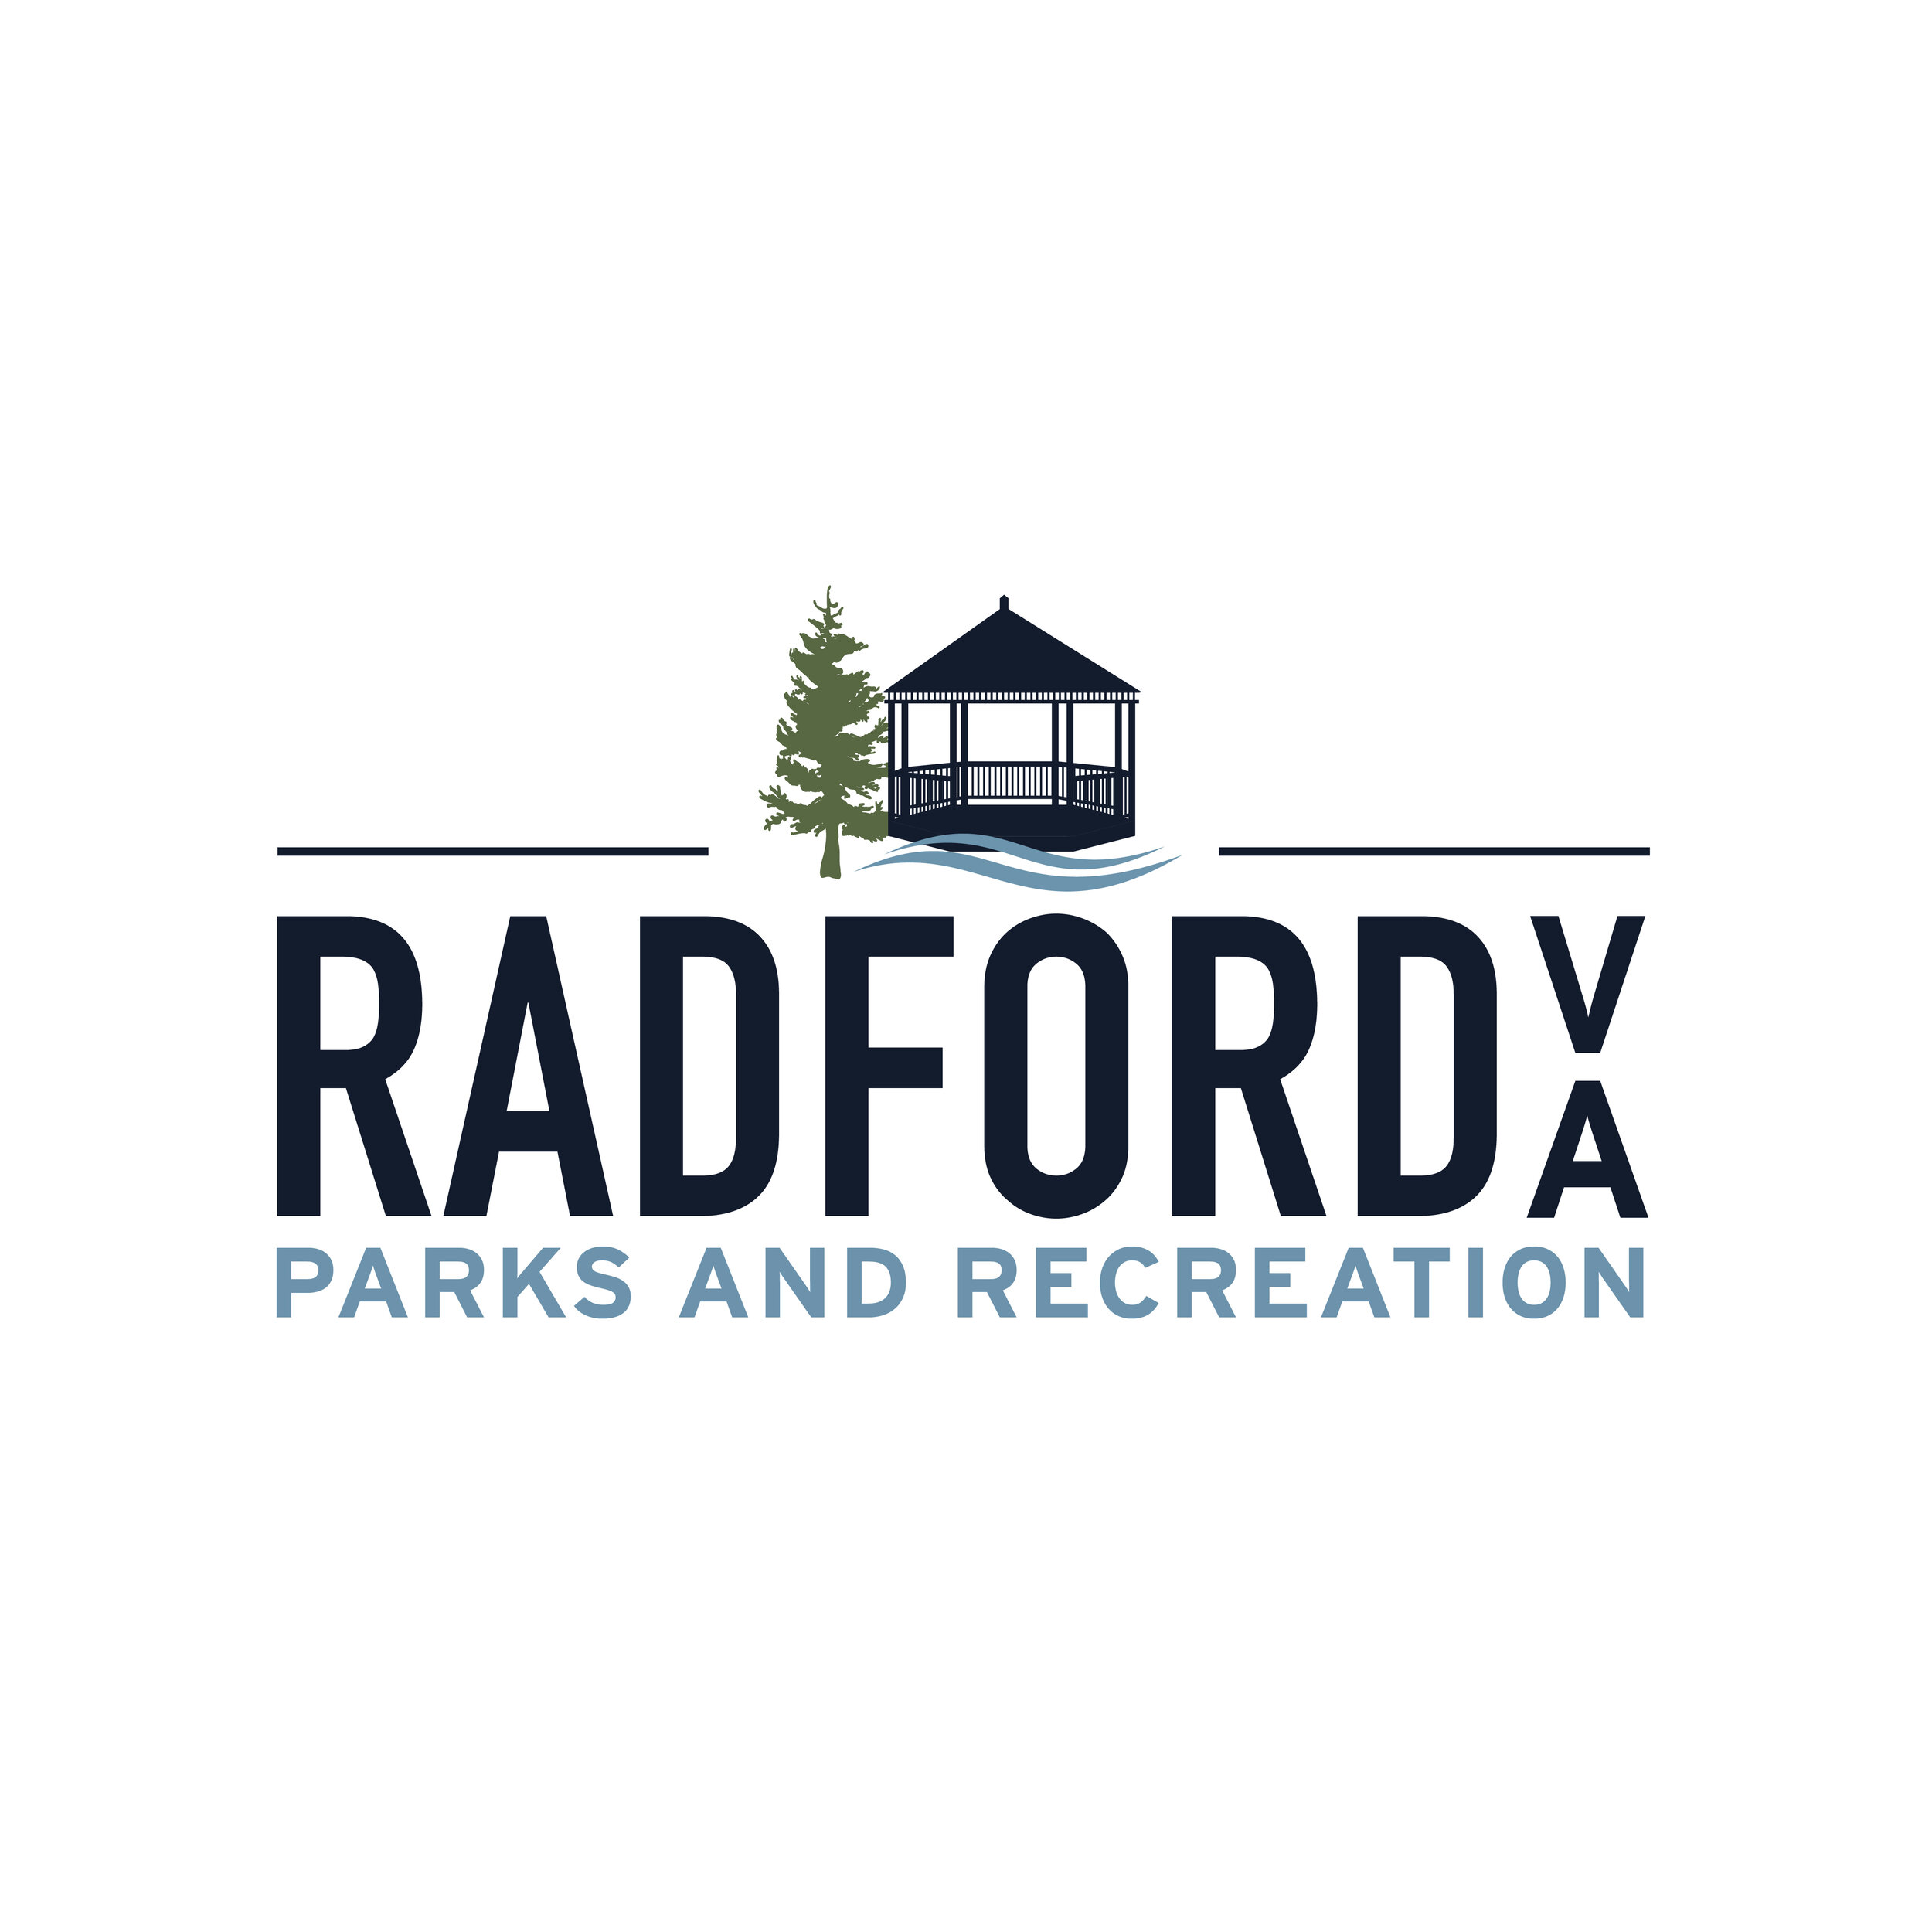 Radford Social Media Parks and Recreation Gazebo Full Color.jpg